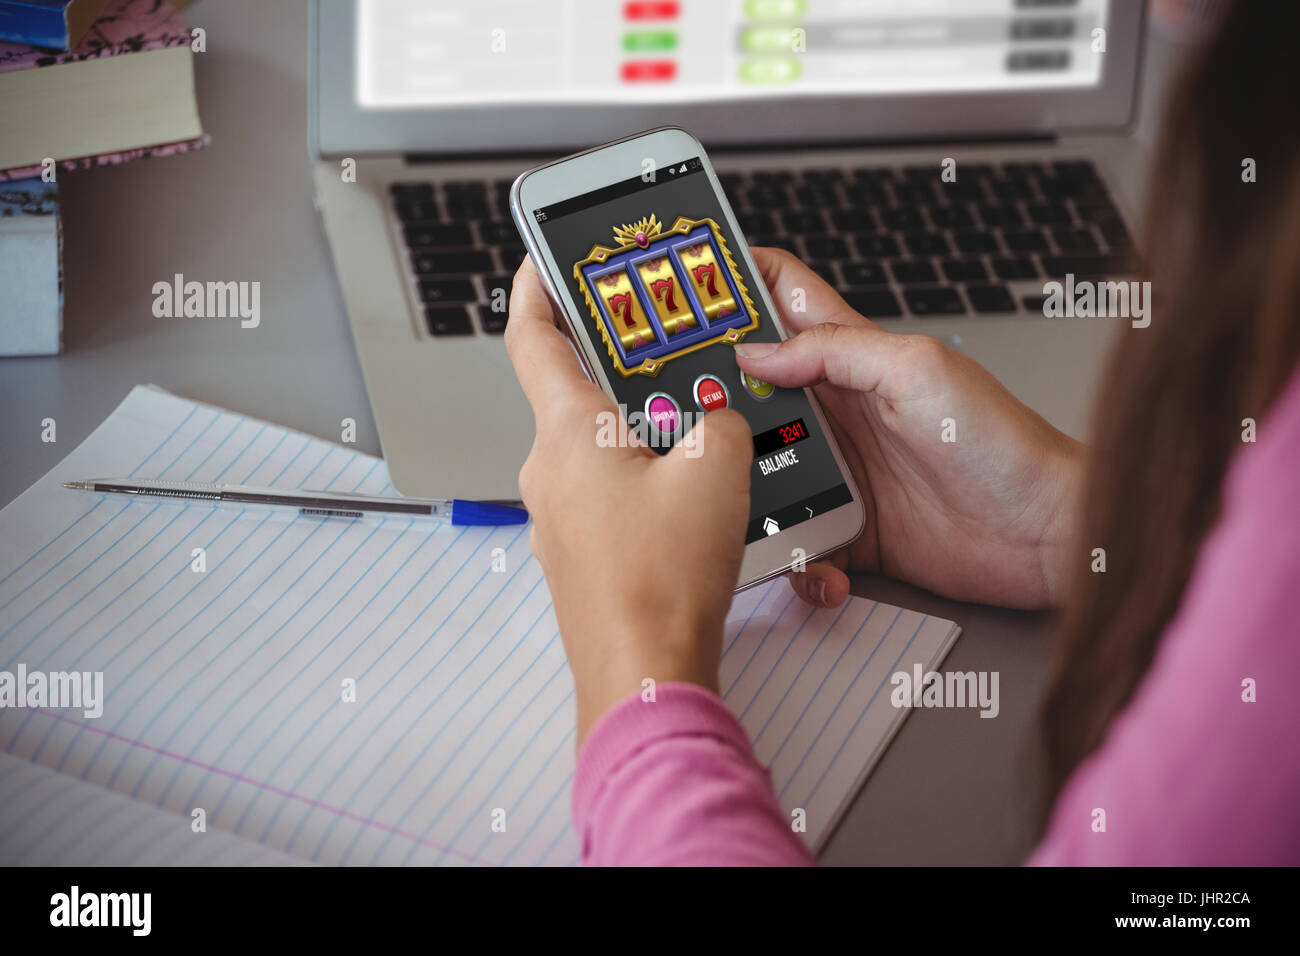 Casino Slot Machine App On Mobile Screen Against Schoolgirl Using Stock Photo Alamy